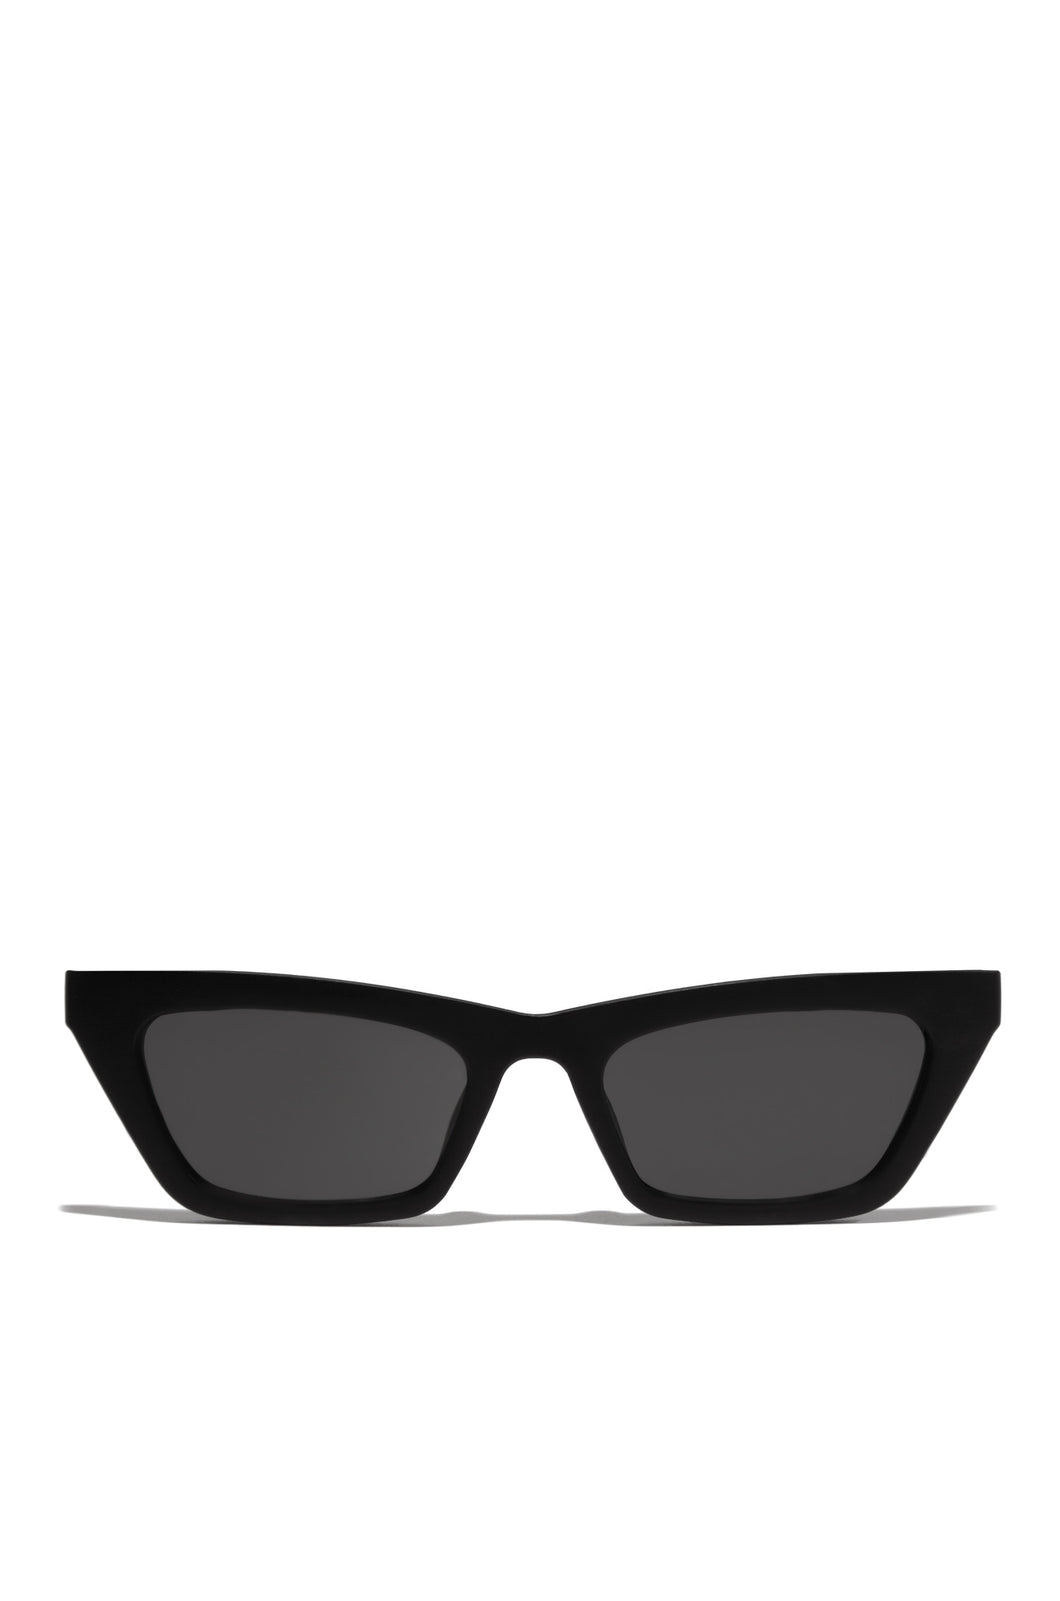 Downtown Streets Sunglasses - Black Matte